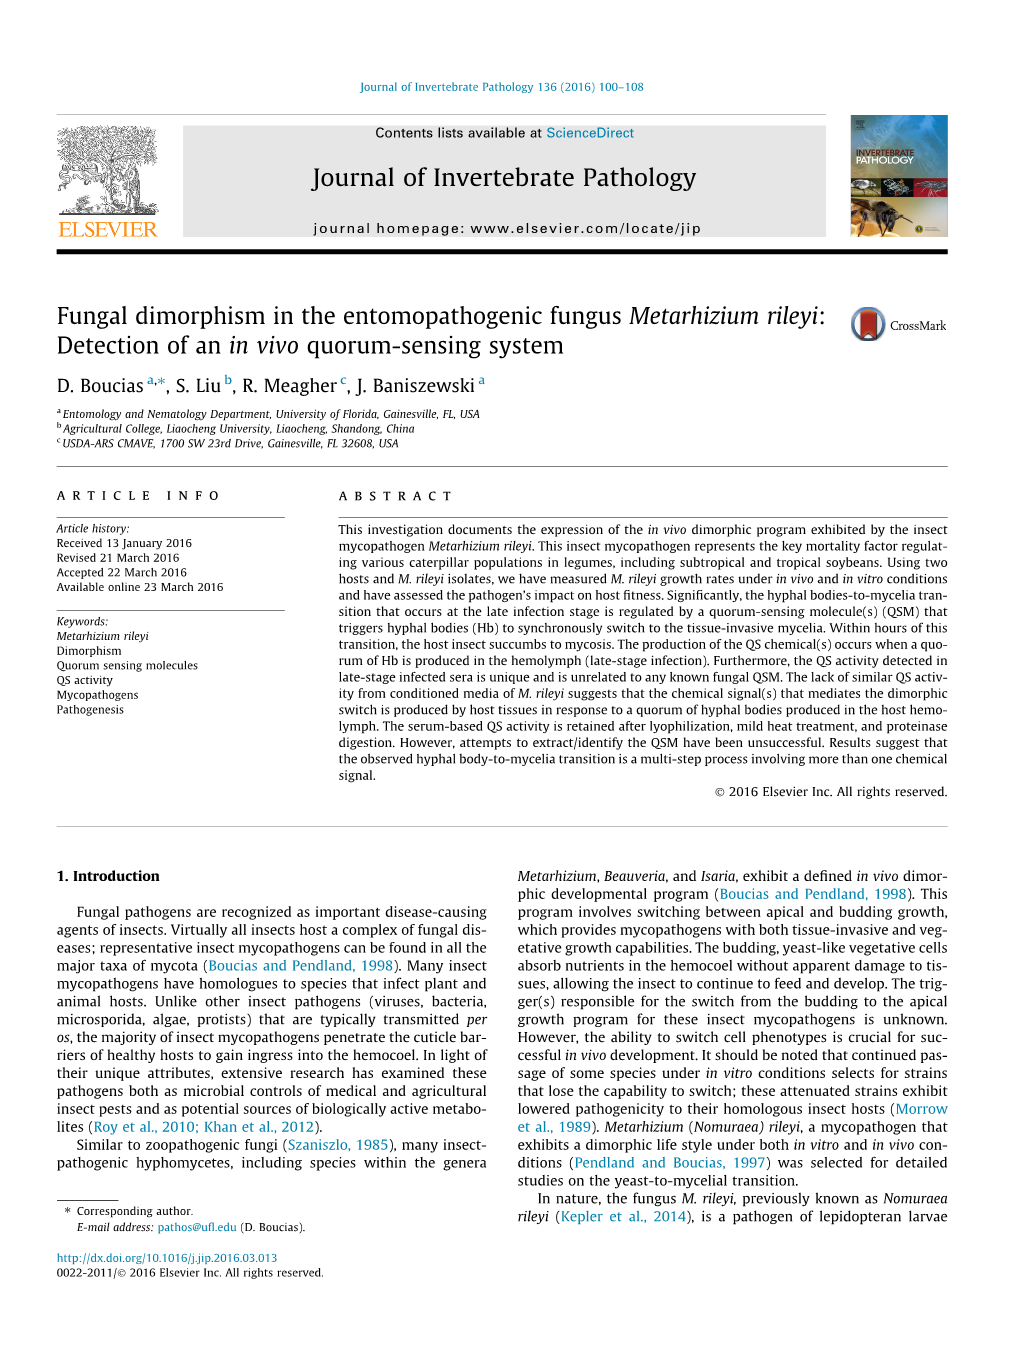 Fungal Dimorphism in the Entomopathogenic Fungus Metarhizium Rileyi: Detection of an in Vivo Quorum-Sensing System ⇑ D